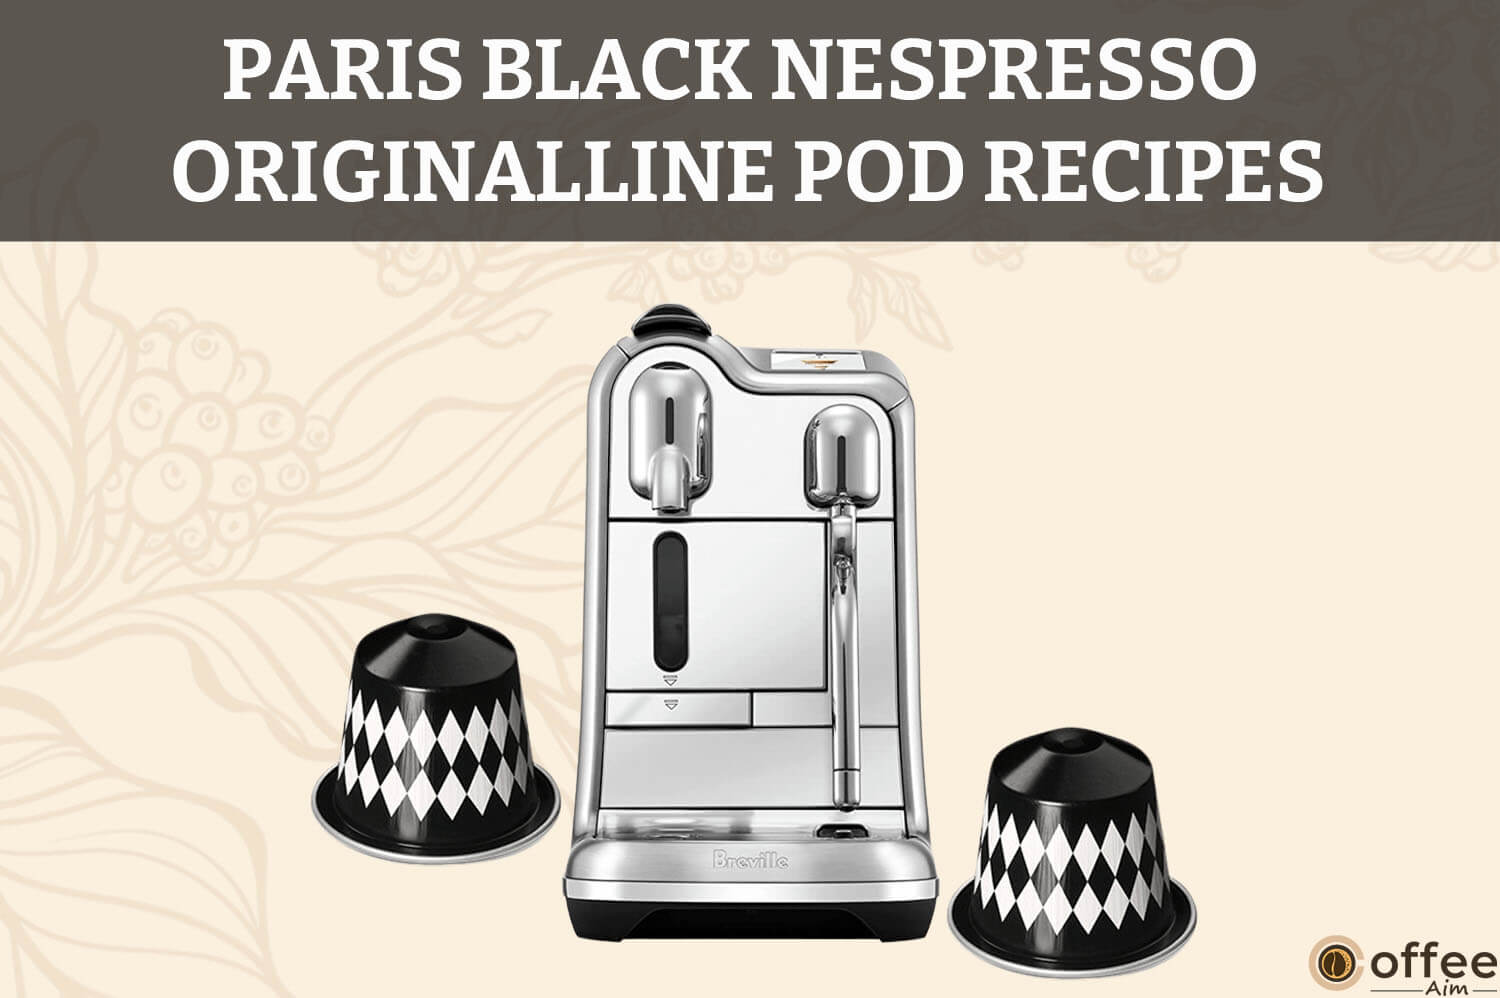 Featured image for the article "Paris Black Nespresso OriginalLine Pod Recipes"